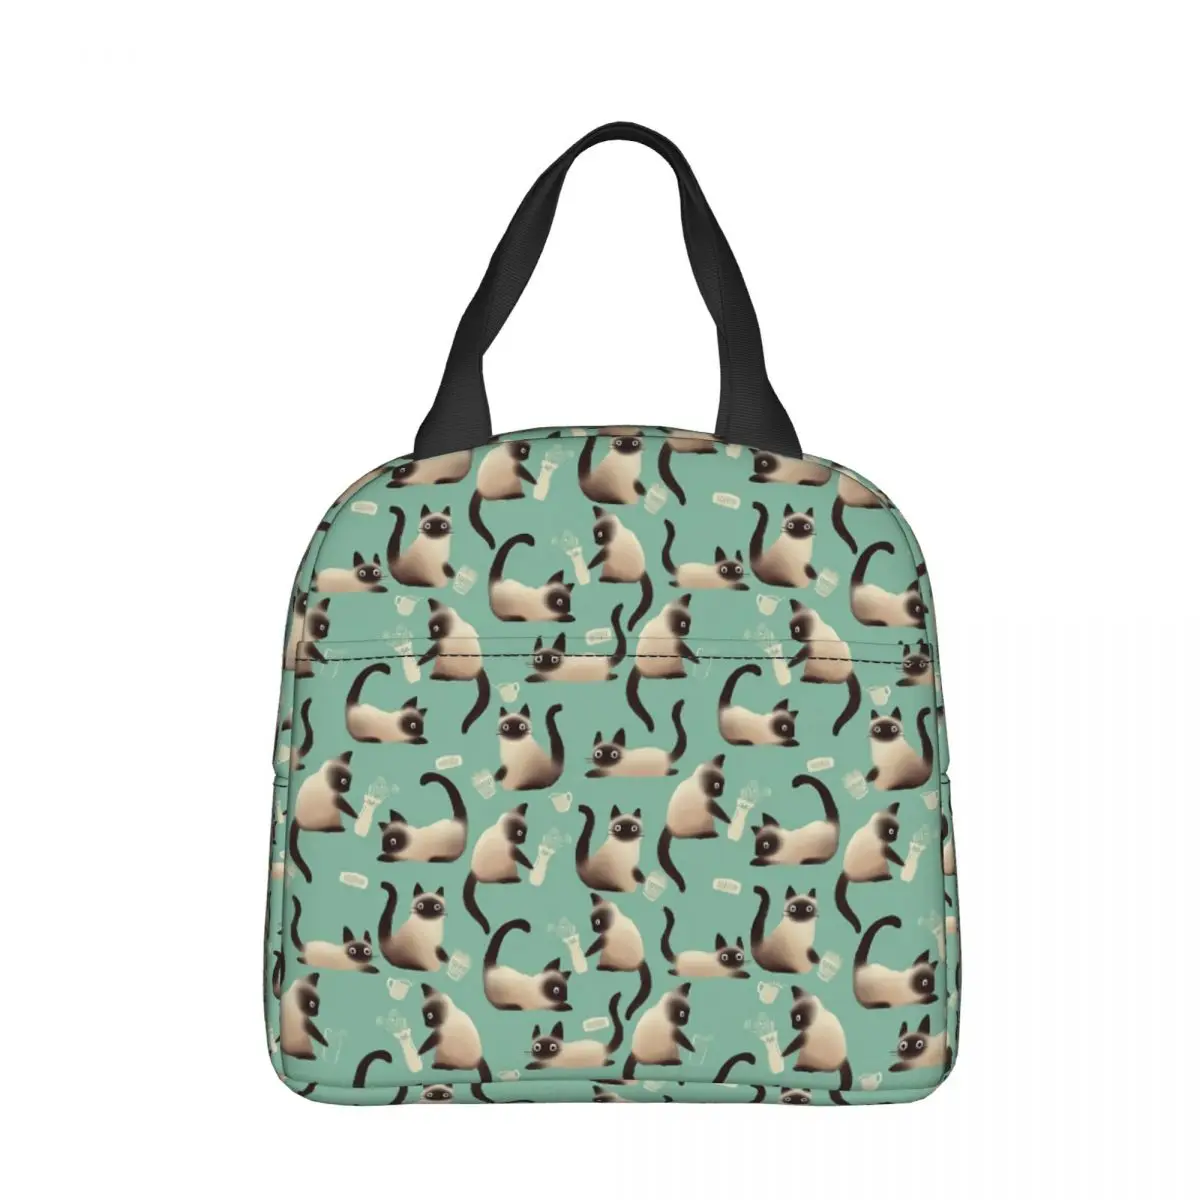 

Shocking Oxford Cloth Portable BagsPet Dog Siamese School Trip Lunch Hiking Debris Cooler Food Handbags